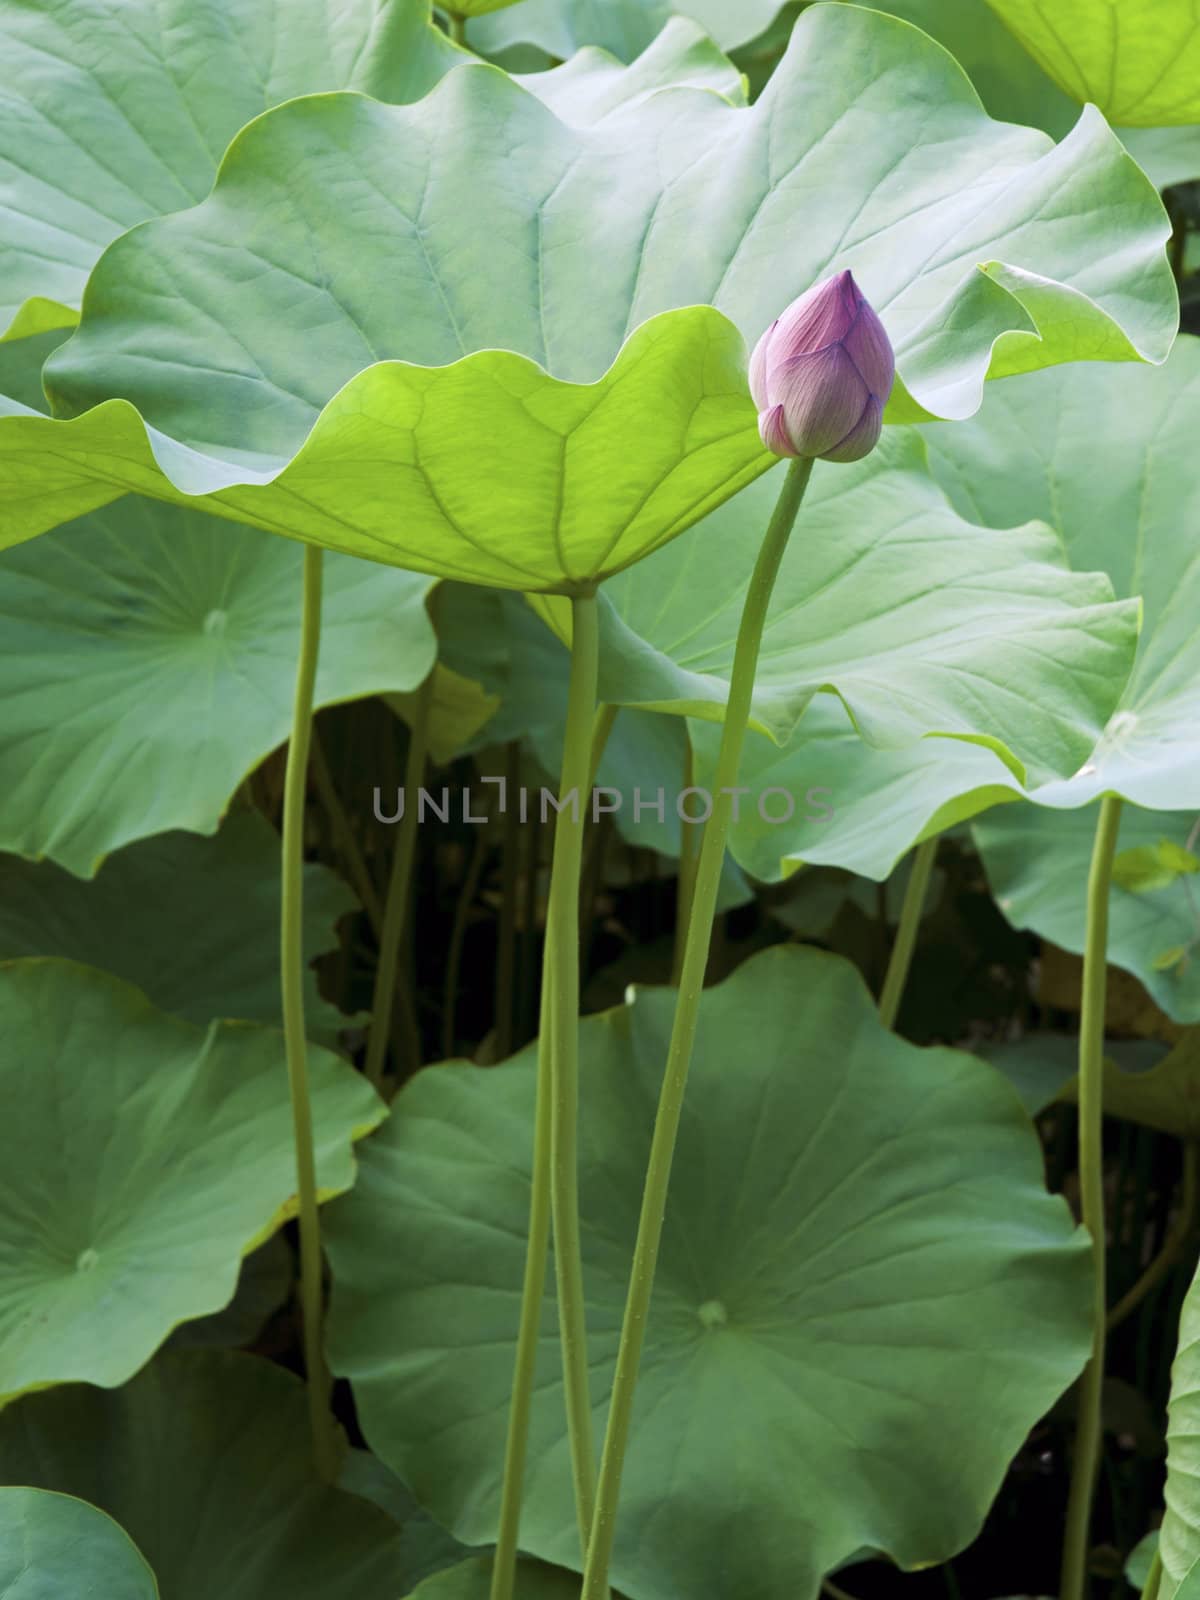 pink lotus bud with many big green leafs around